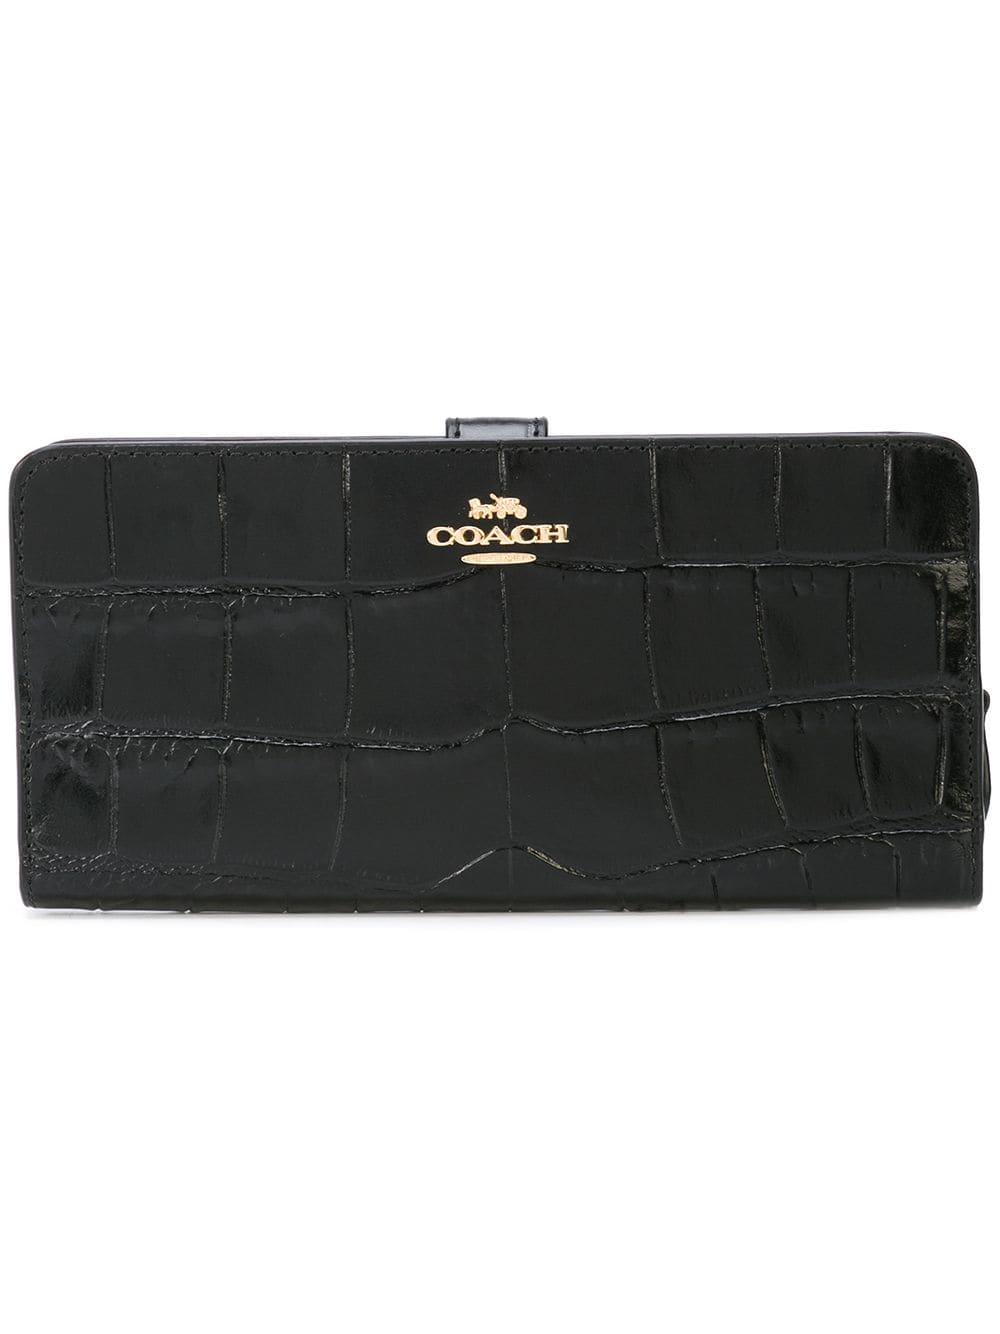 COACH Leather Skinny Wallet in Black - Lyst